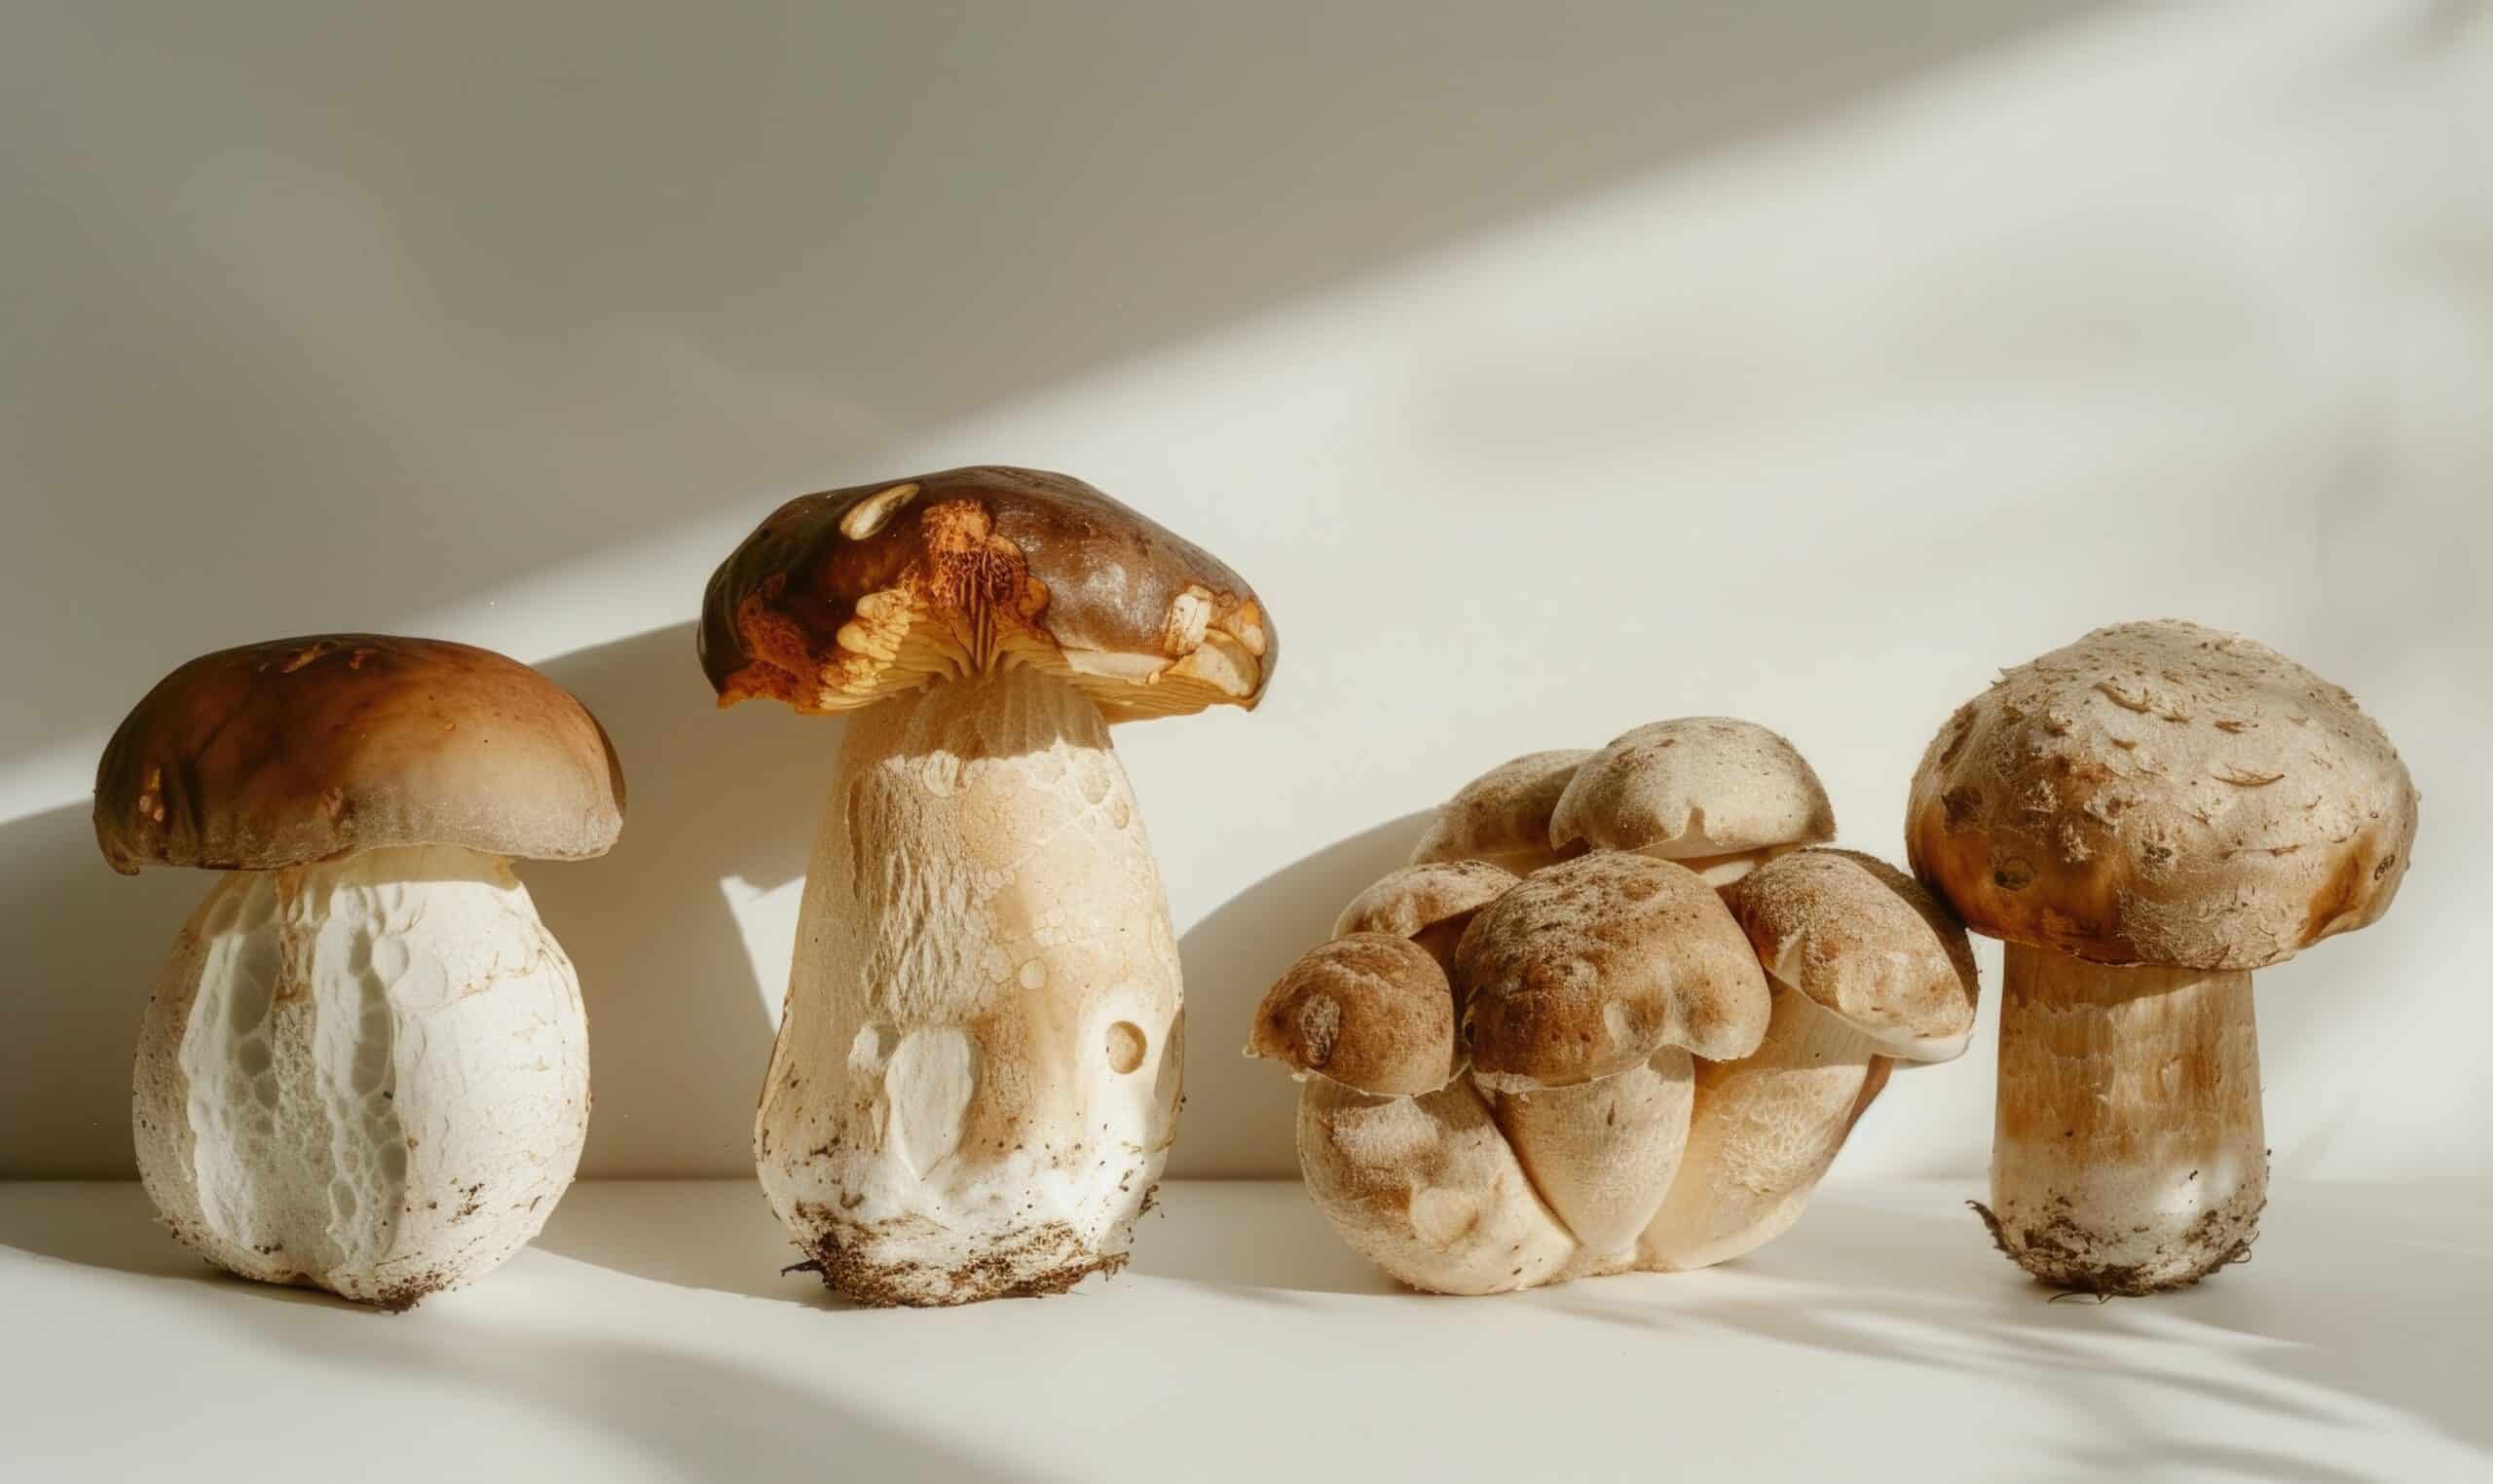 growmyownhealthfood.com : How can shiitake mushrooms be grown?